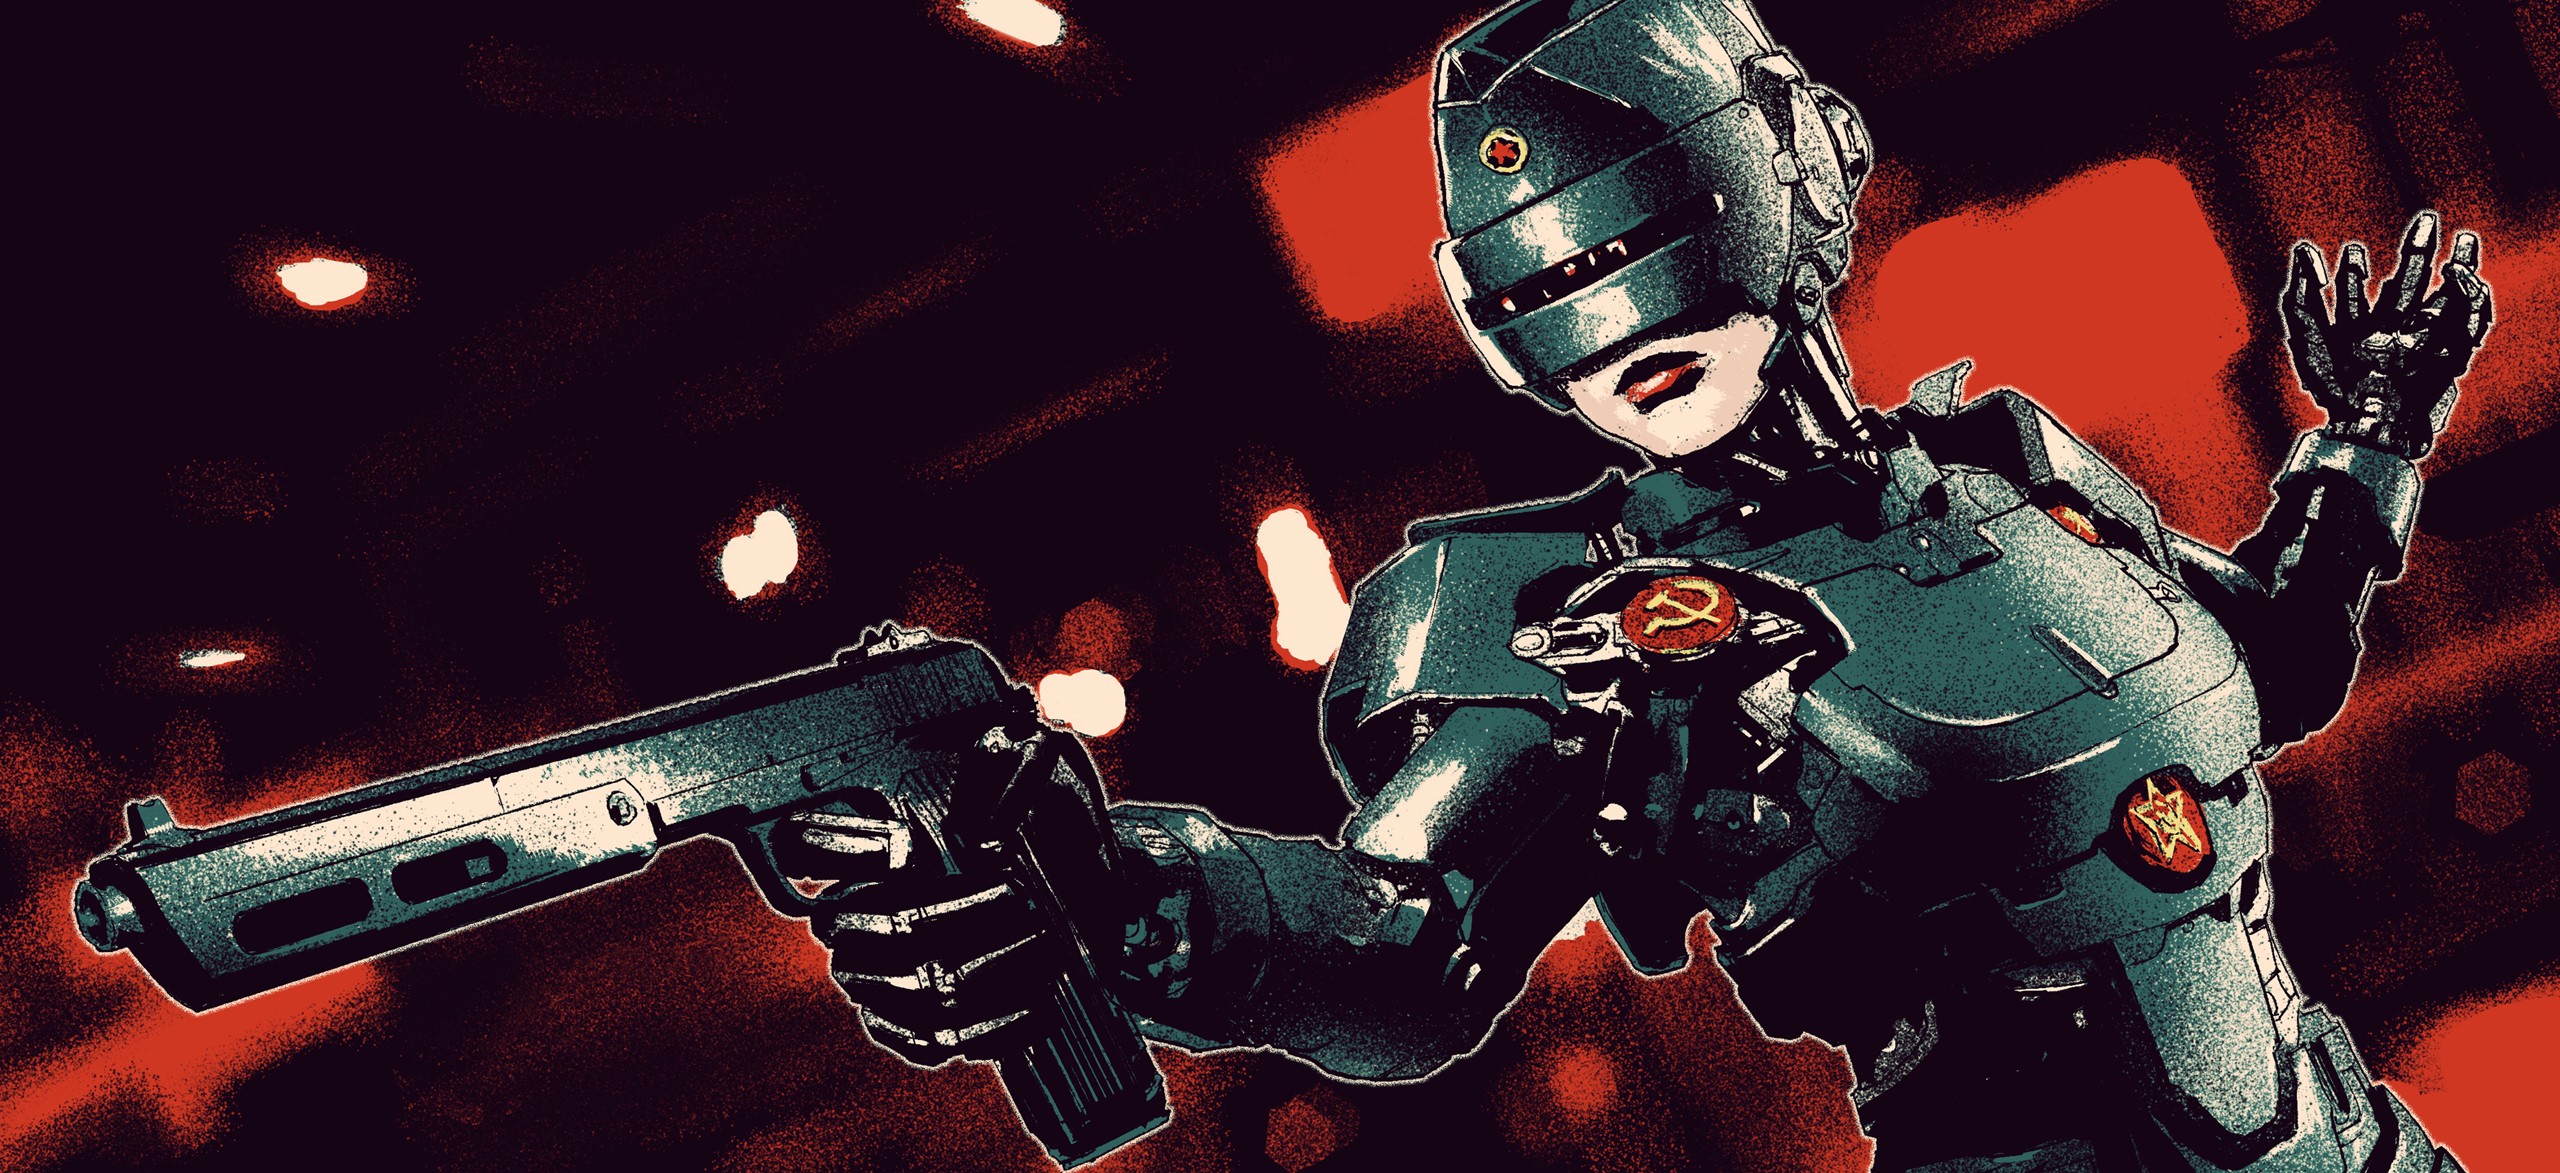 General 2560x1173 artwork cyborg RoboCop women machine science fiction futuristic red lipstick aiming movie characters